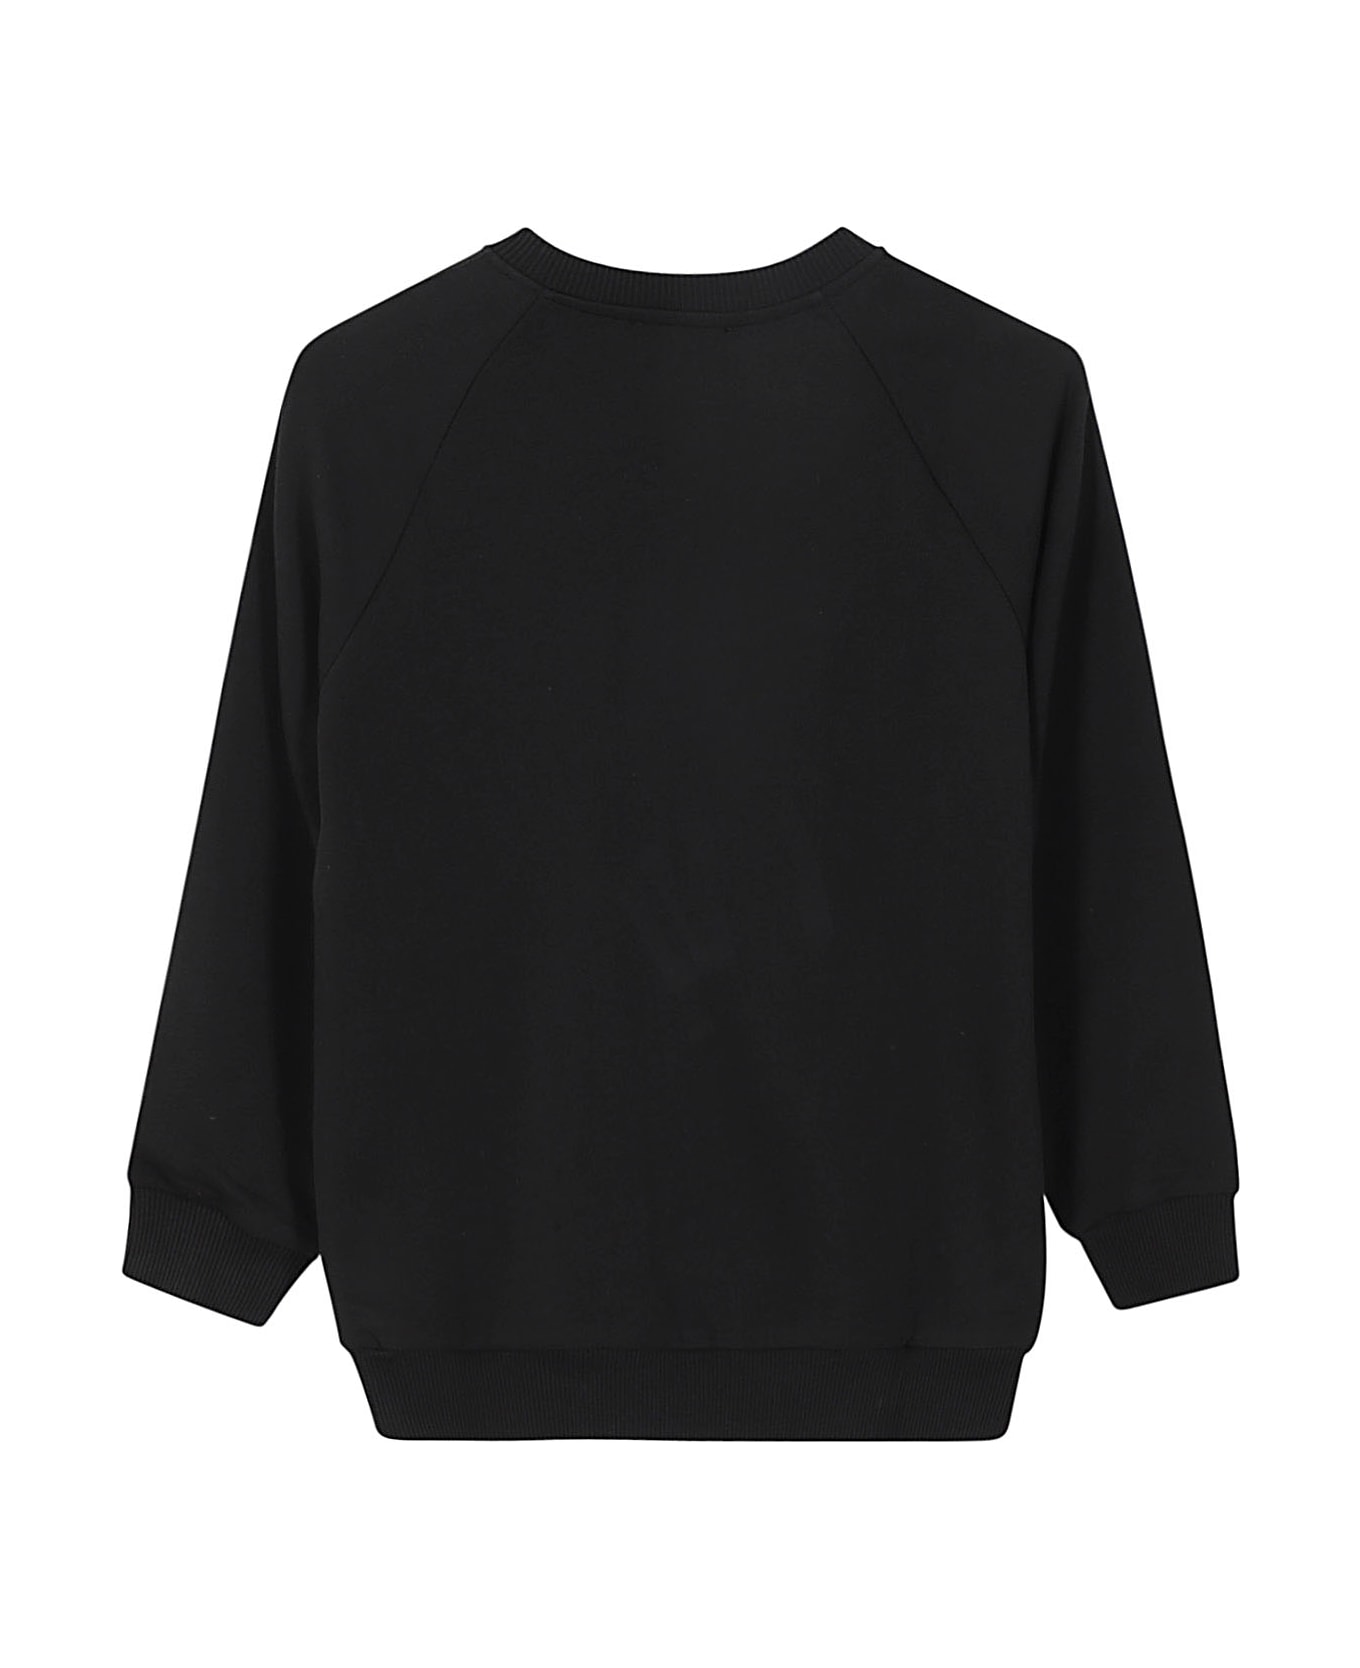 Balmain Sweatshirt - Black